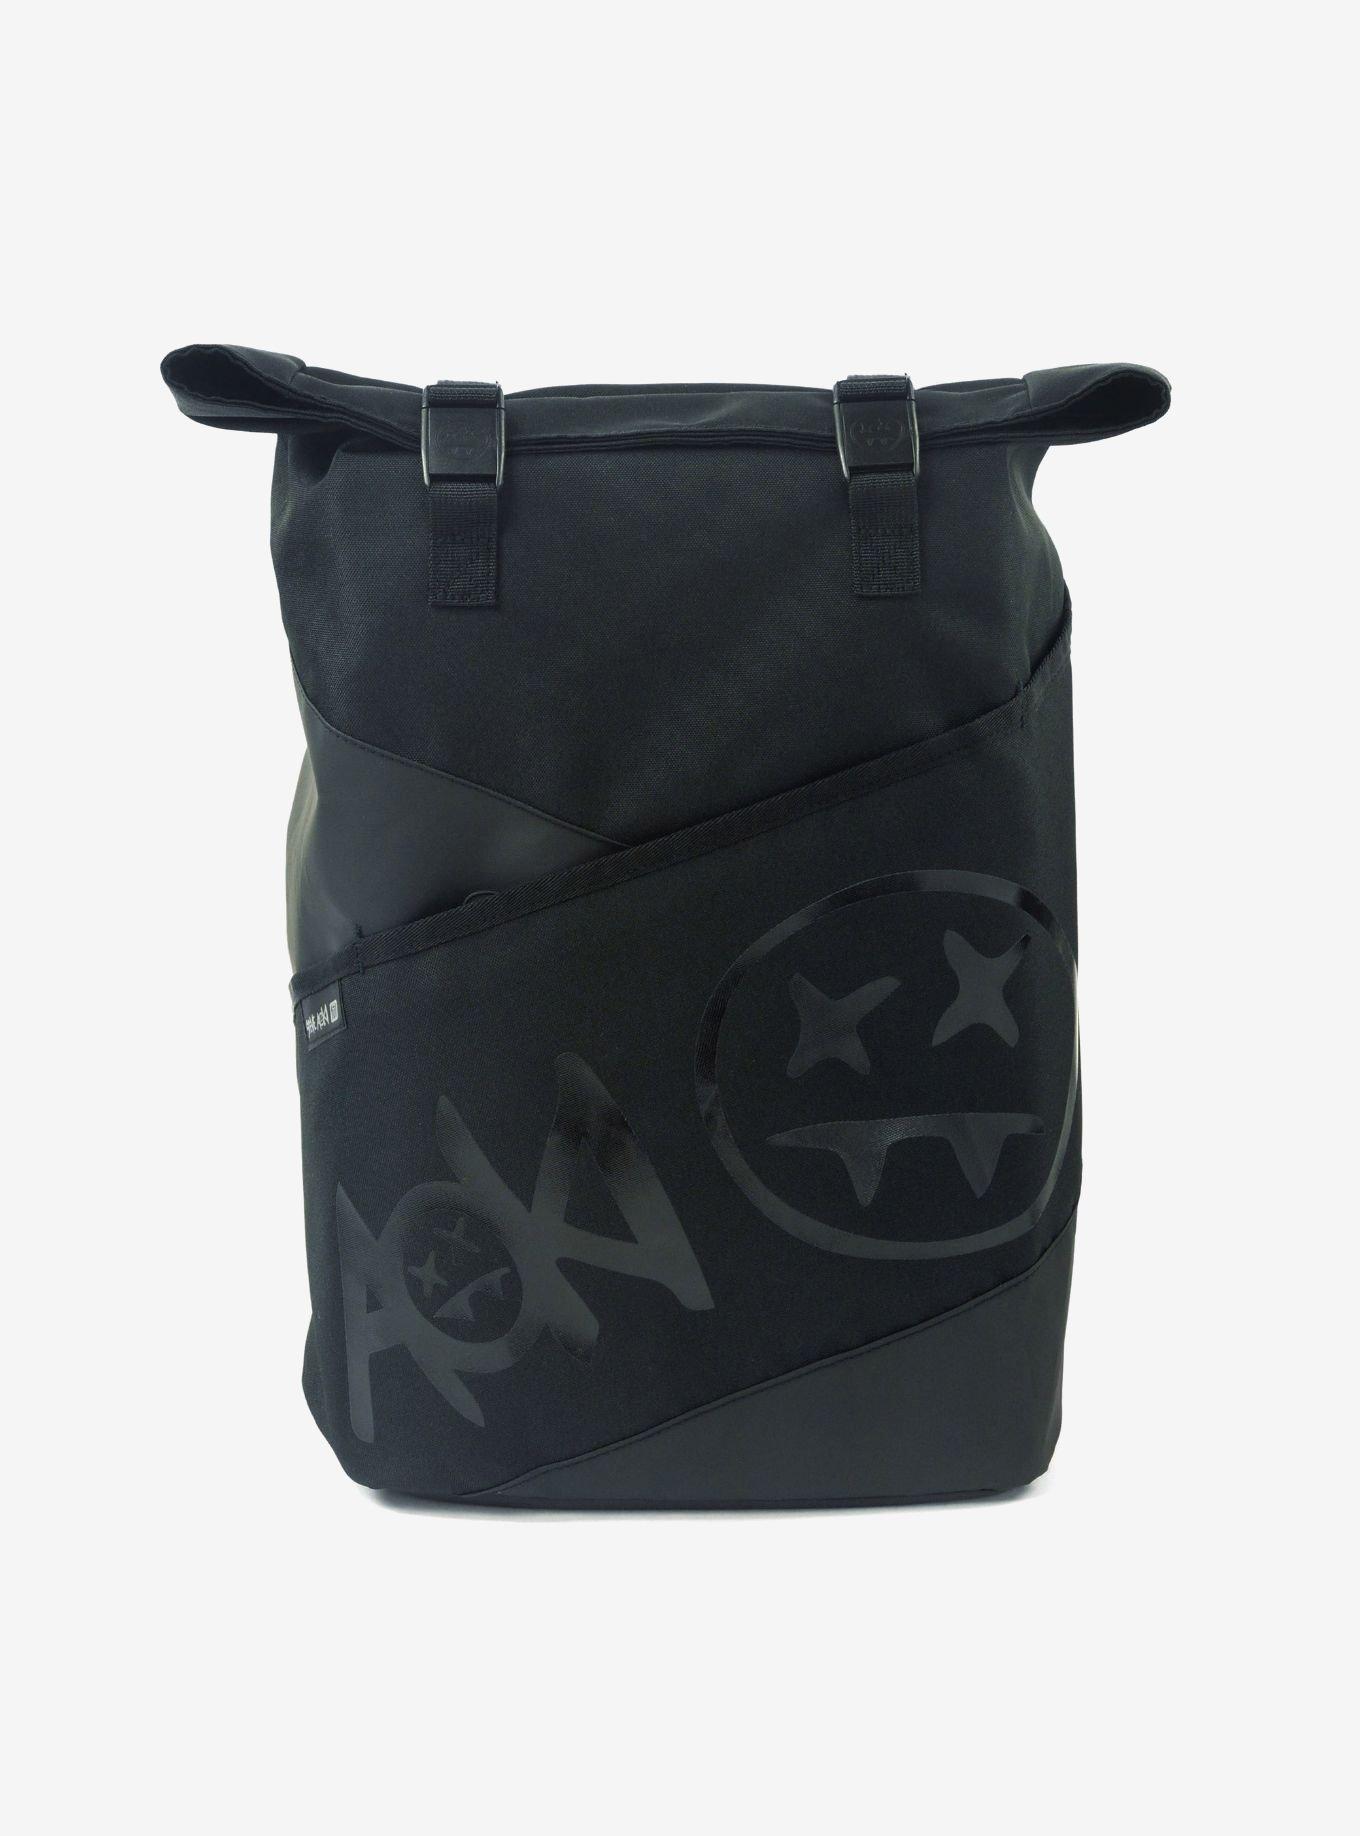 Steve Aoki FUL FANG Rolltop Laptop Backpack, , hi-res